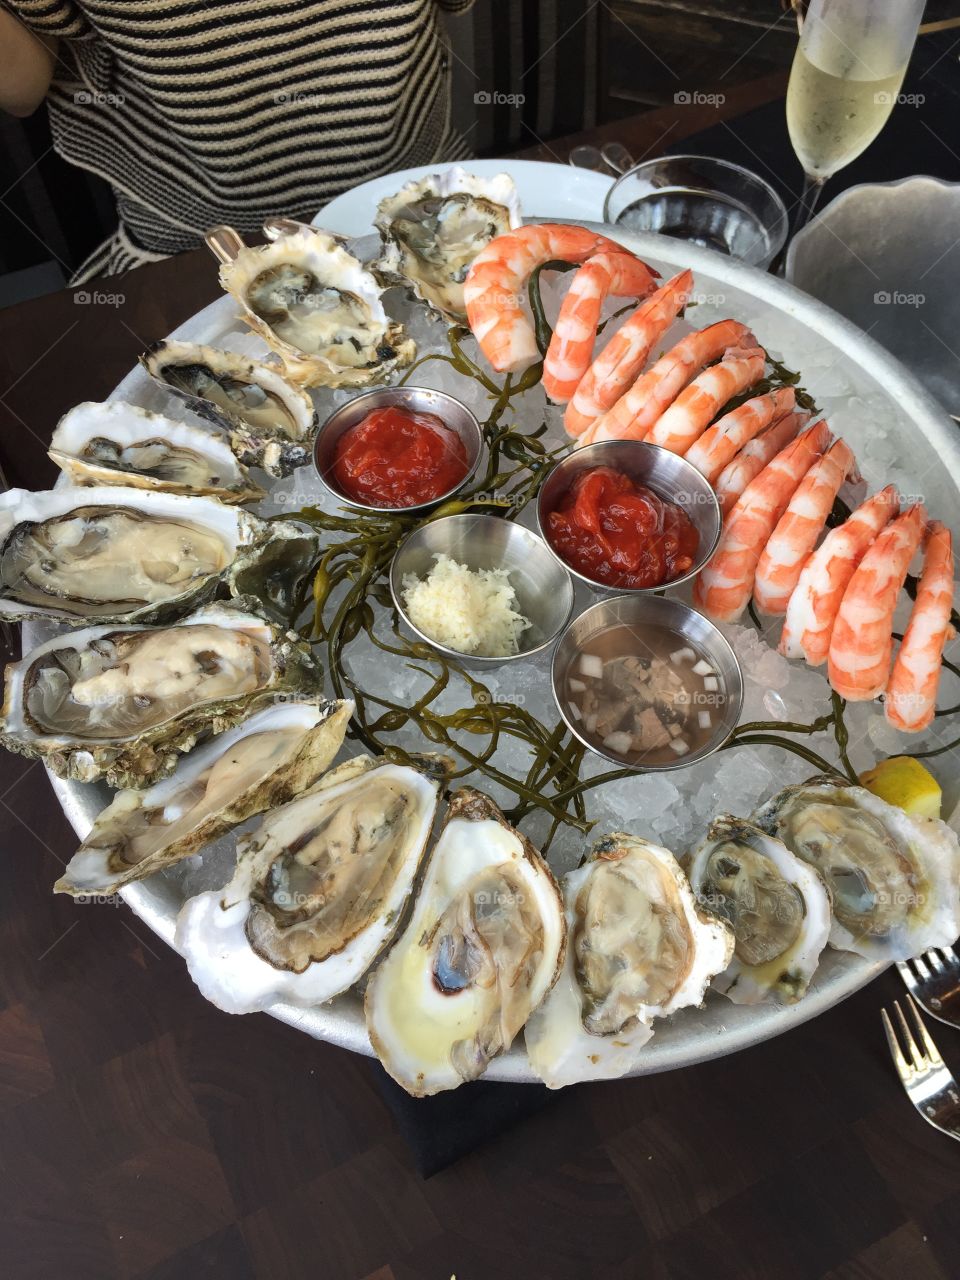 Oyster and shrimp platter